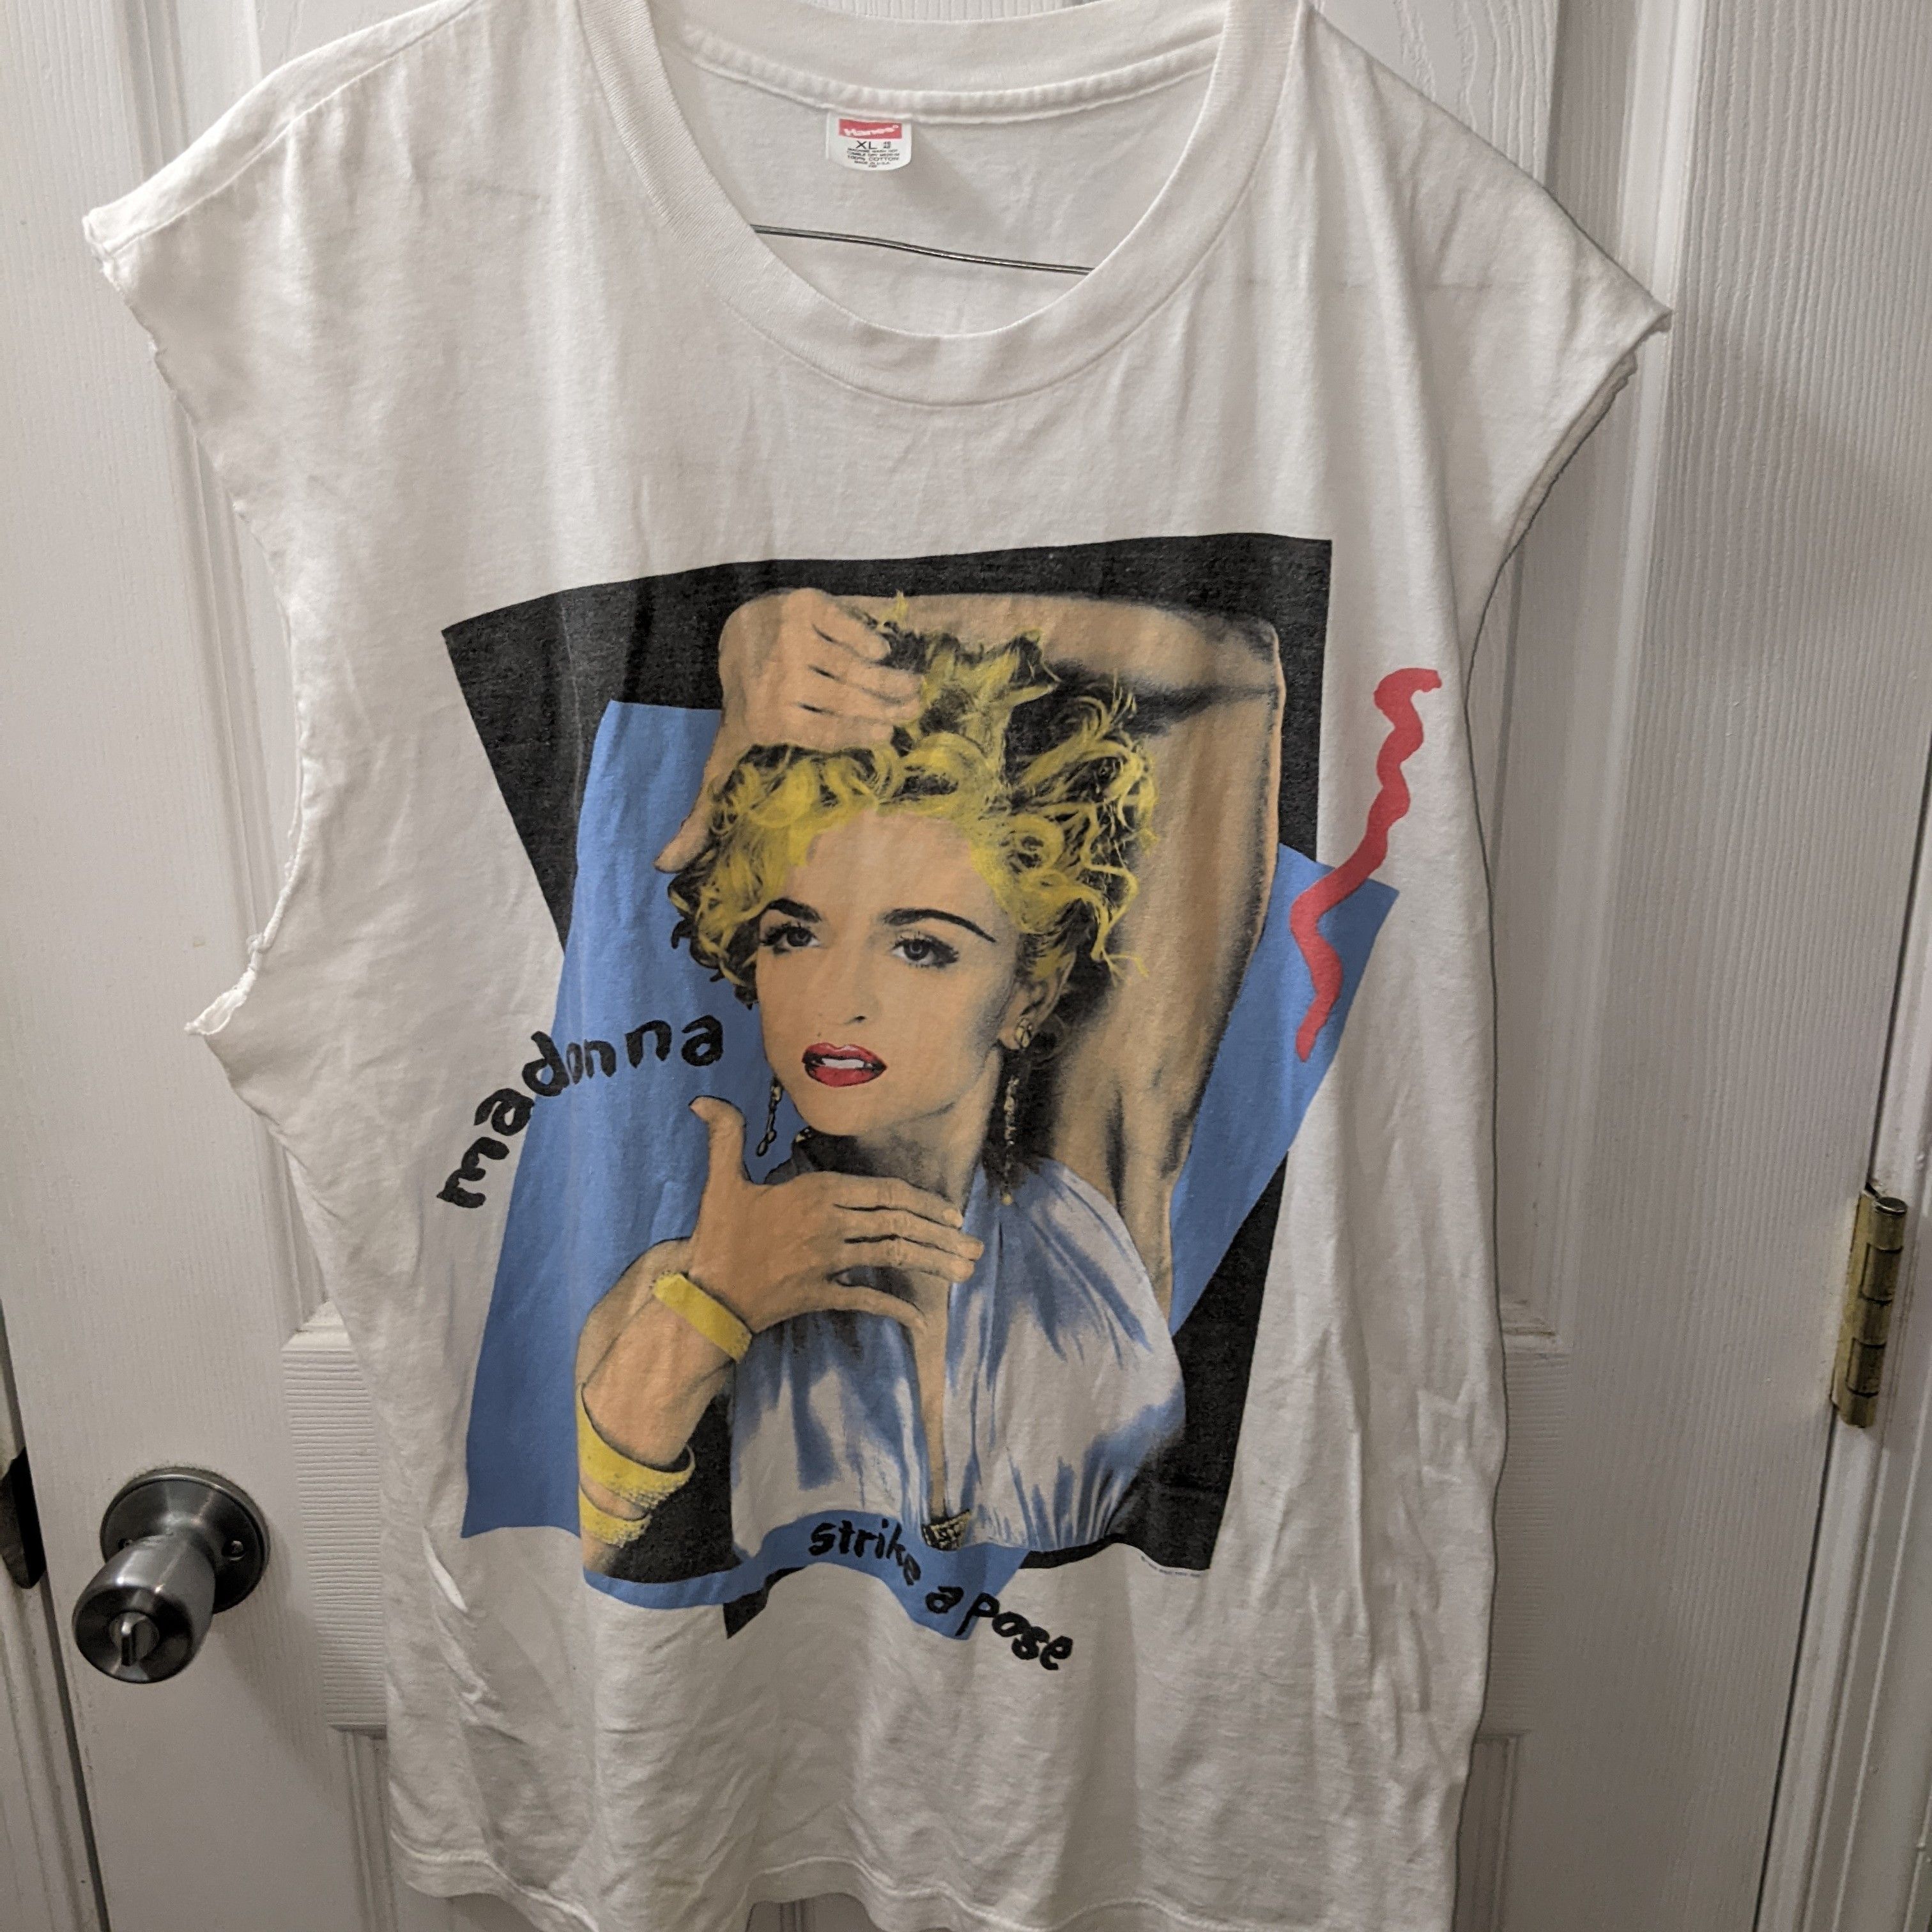 Vintage Madonna Vogue Strike a Pose Shirt - Blond Ambition Tour T 